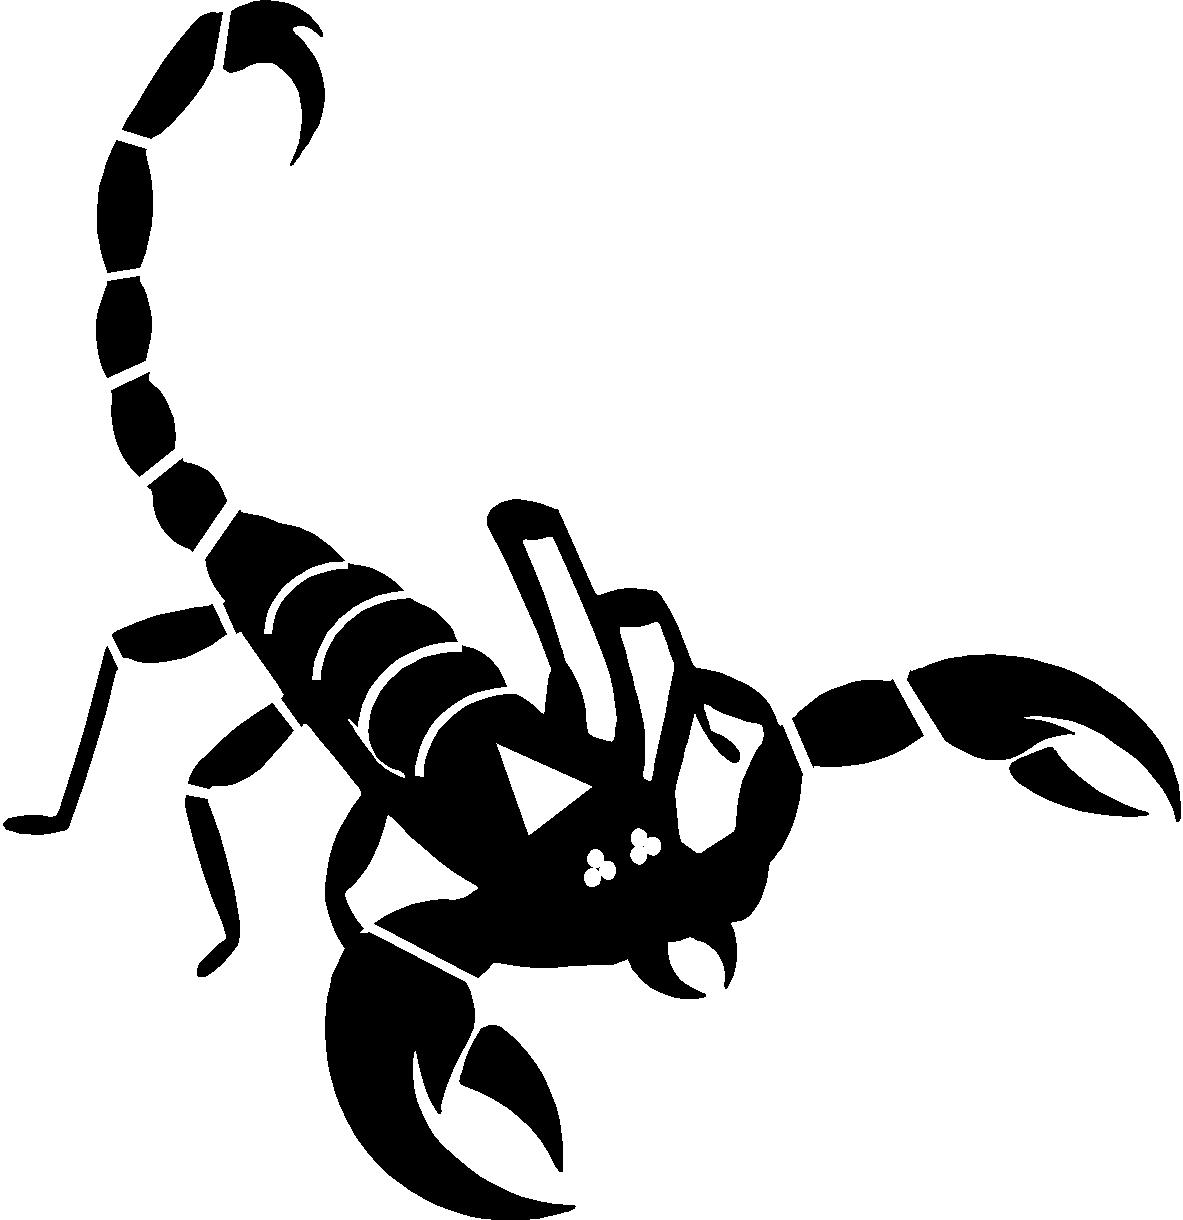 Scorpion image - vector clip art online, royalty free & public domain